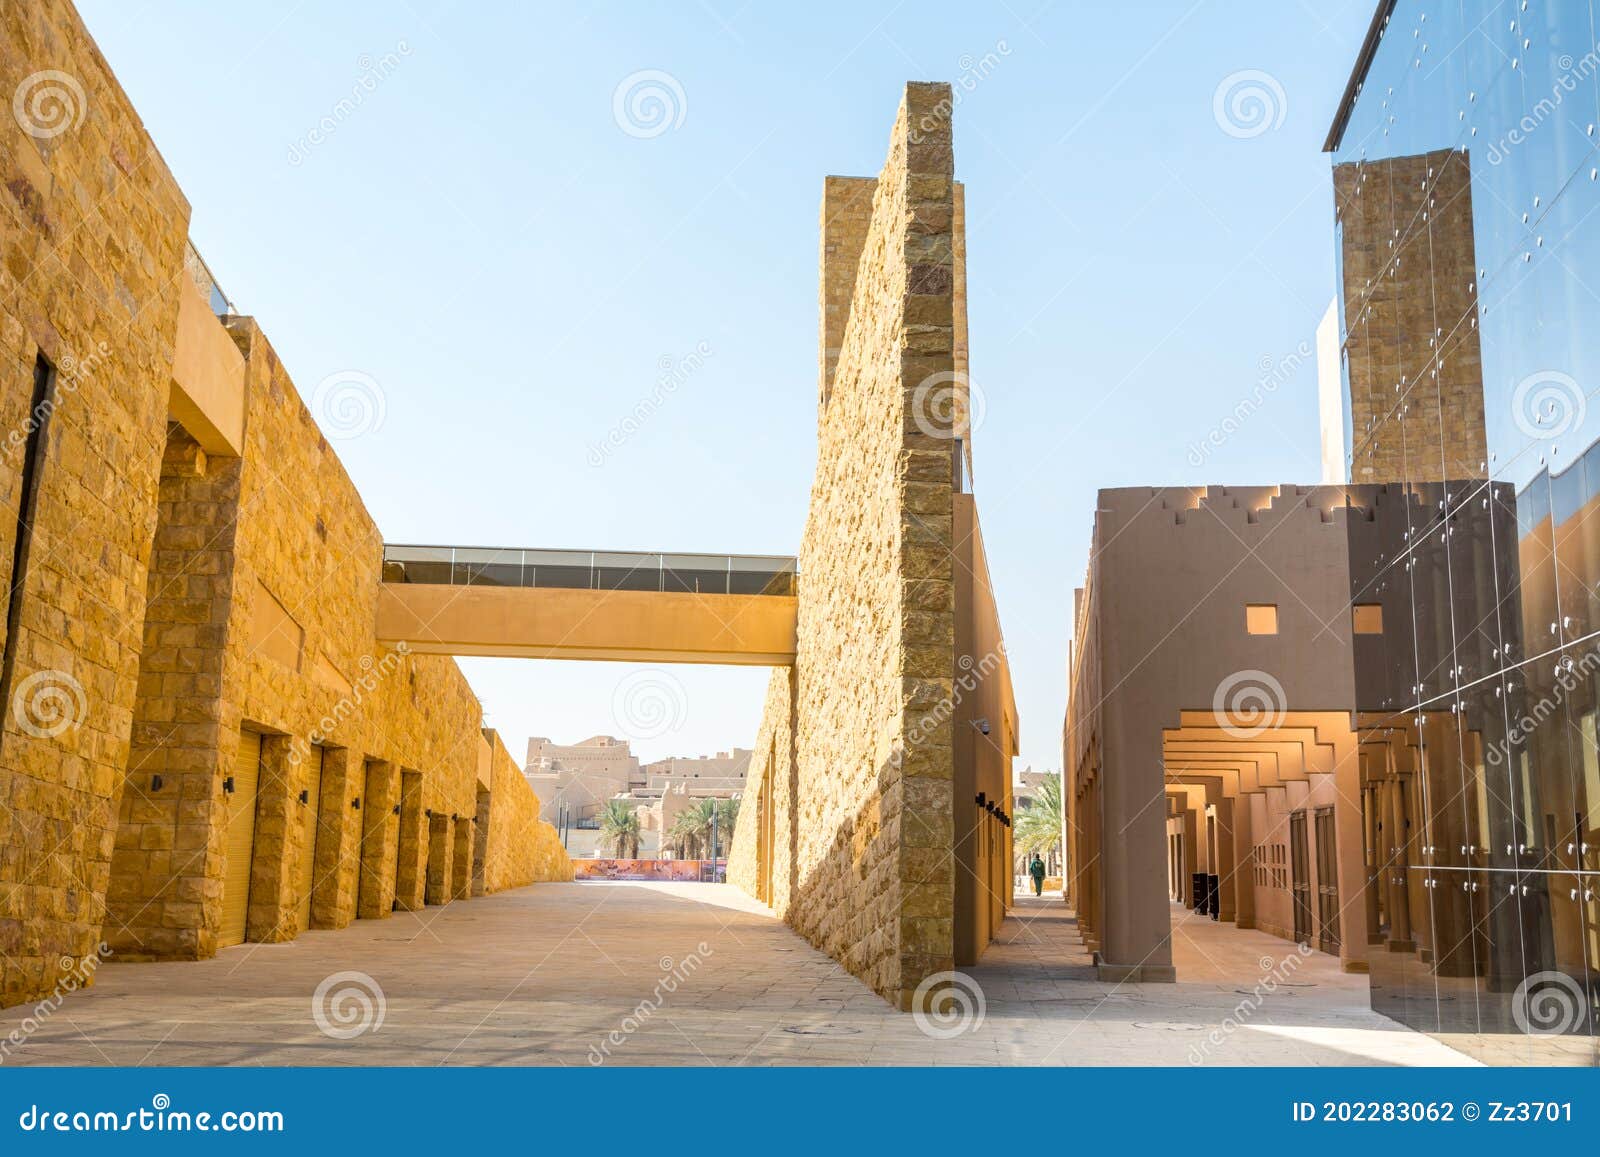 buildings of diraiyah, also as dereyeh and dariyya, a town in riyadh, saudi arabia, was the original home of the saudi royal